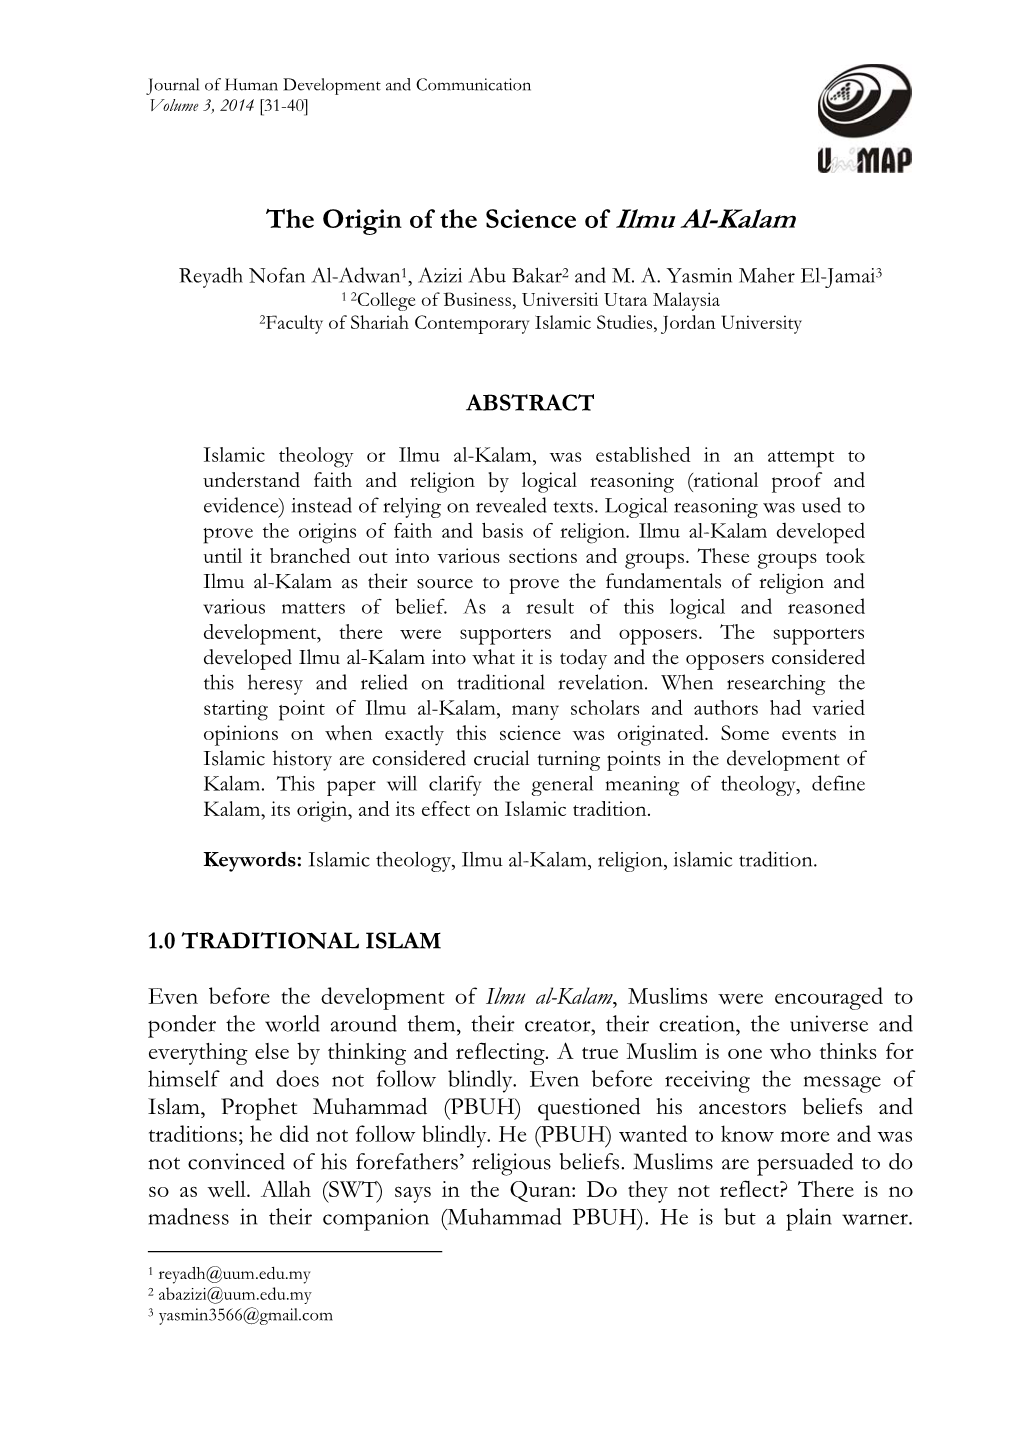 The Origin of the Science of Ilmu Al-Kalam